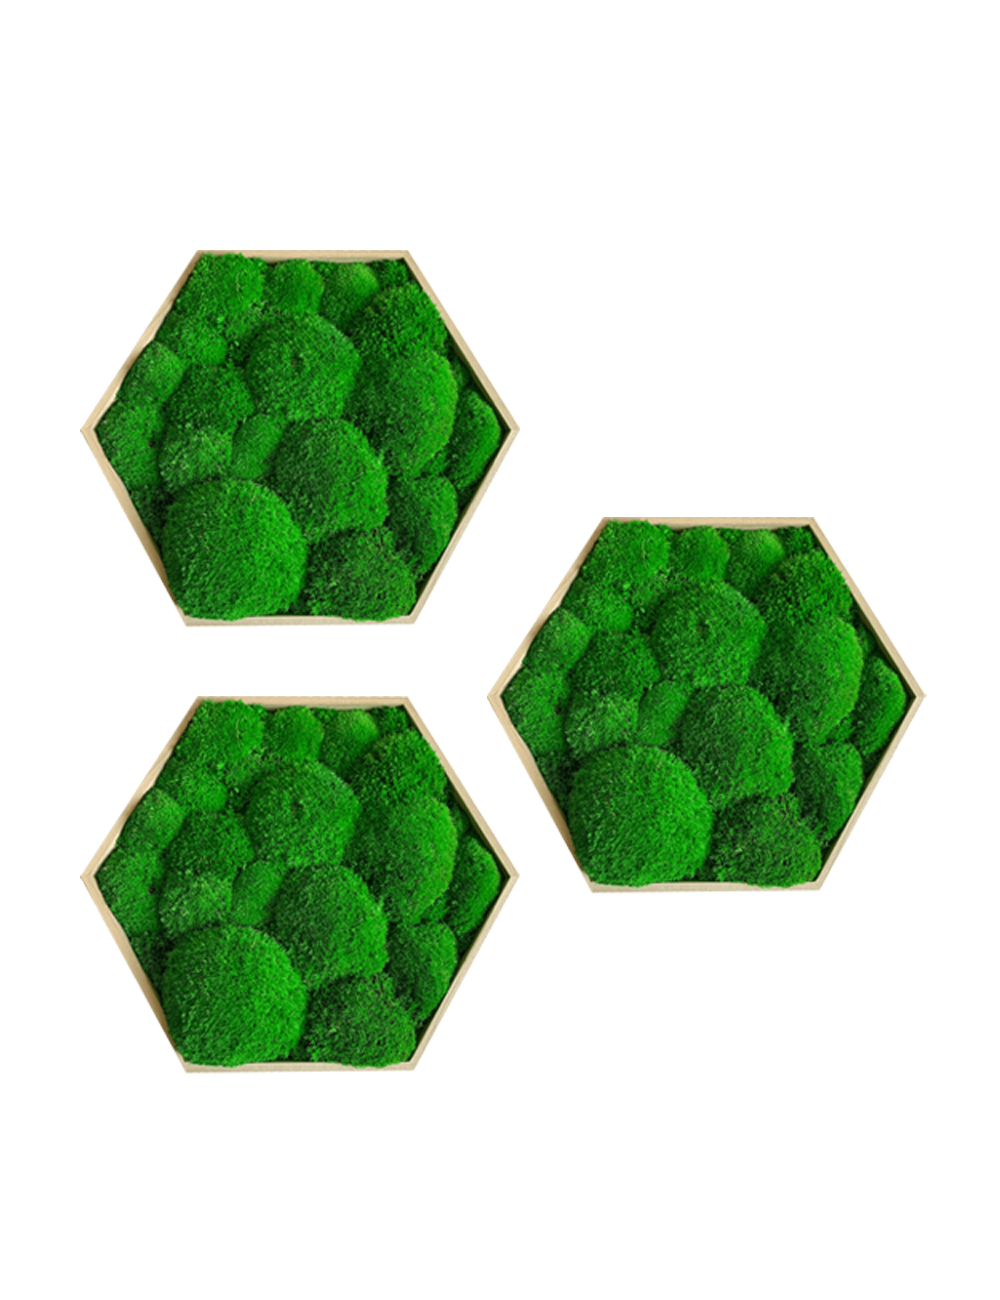 Hexagone en mousse boule verte